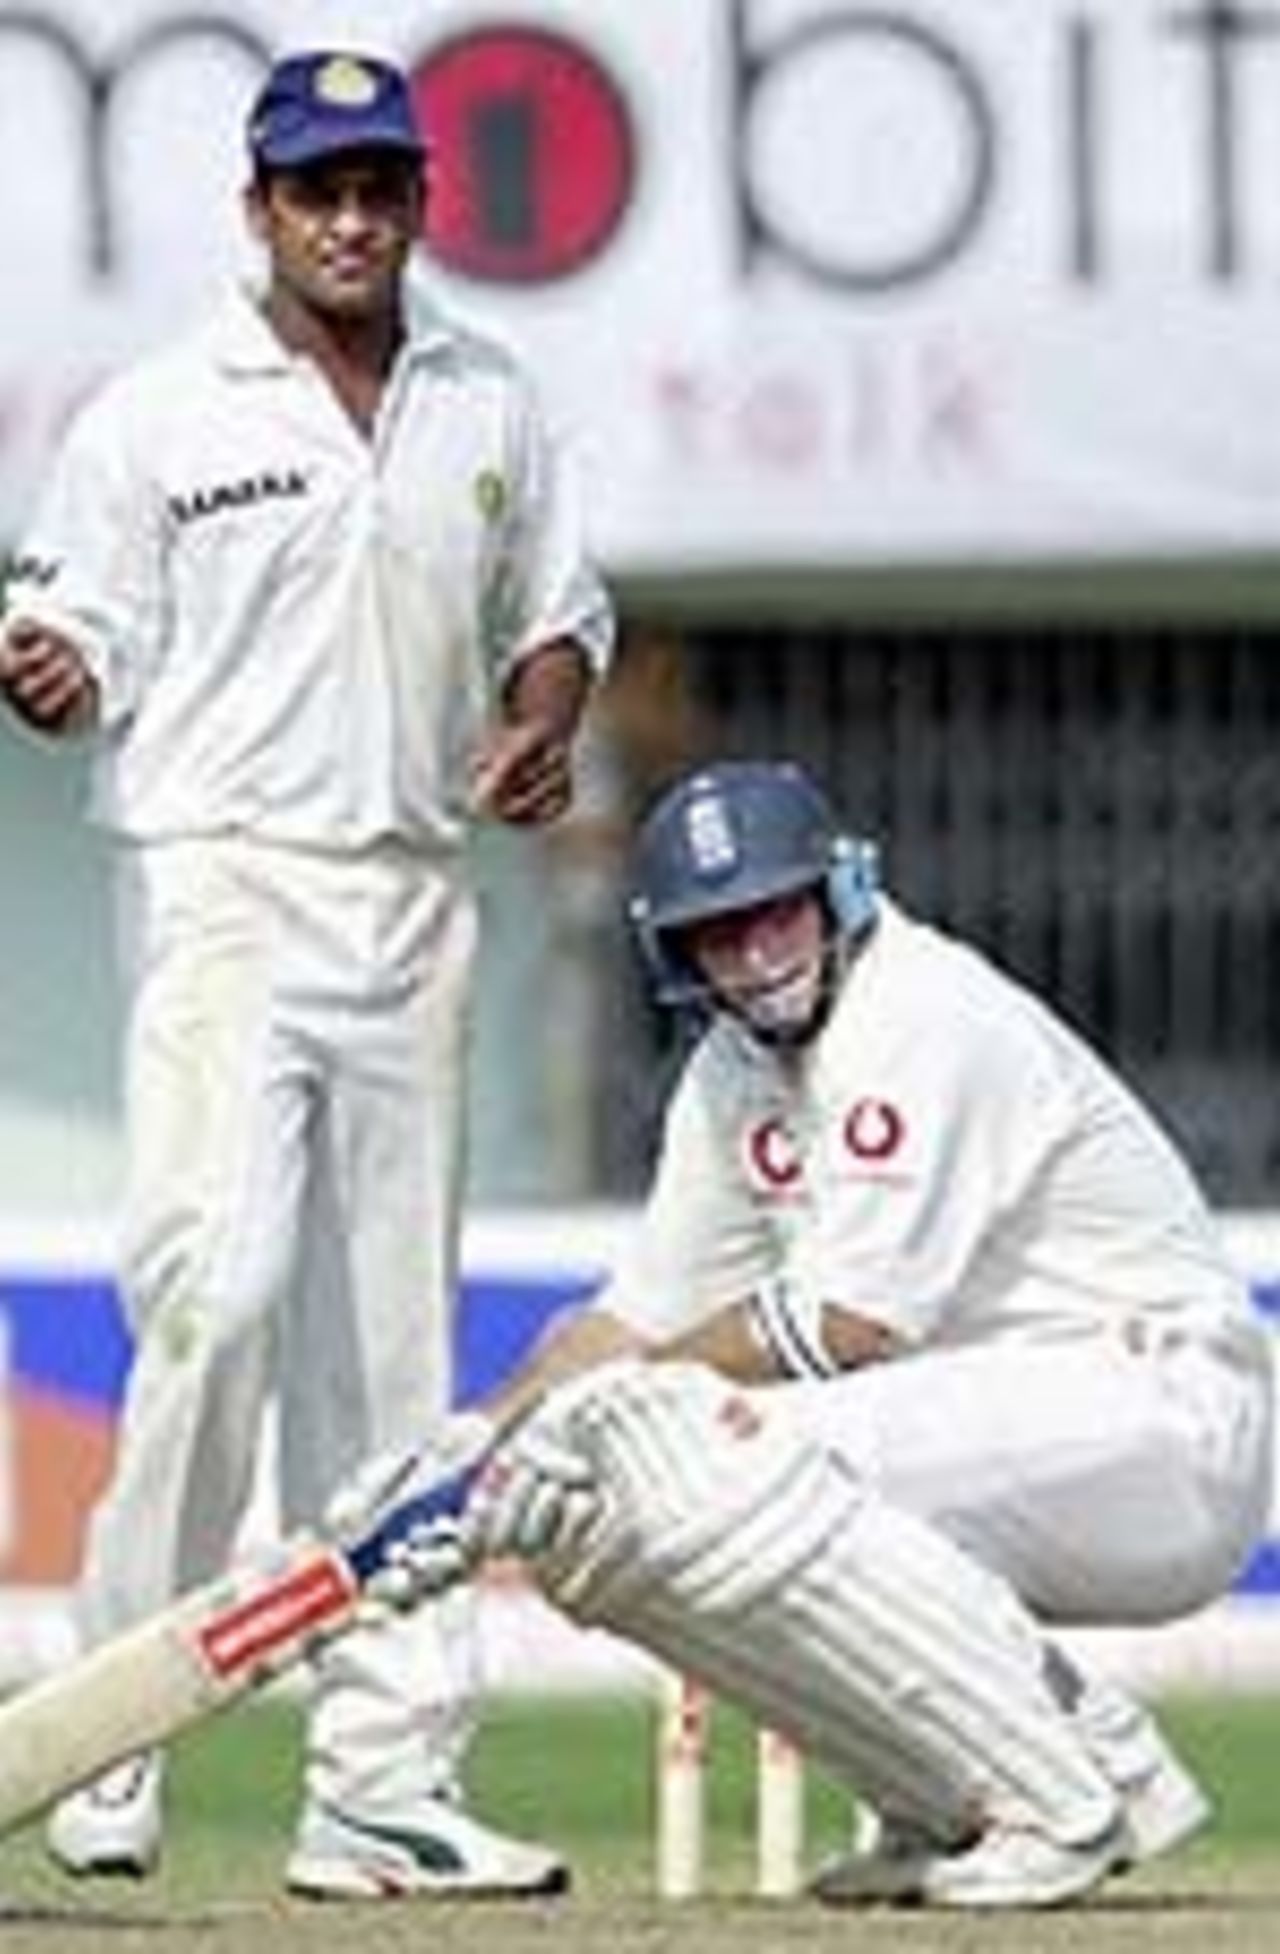 Indian Board President's XI v England XI, Lal Bahadur Shastri Stadium, Hyderabad, Deccan, 22 - 24 November 2001